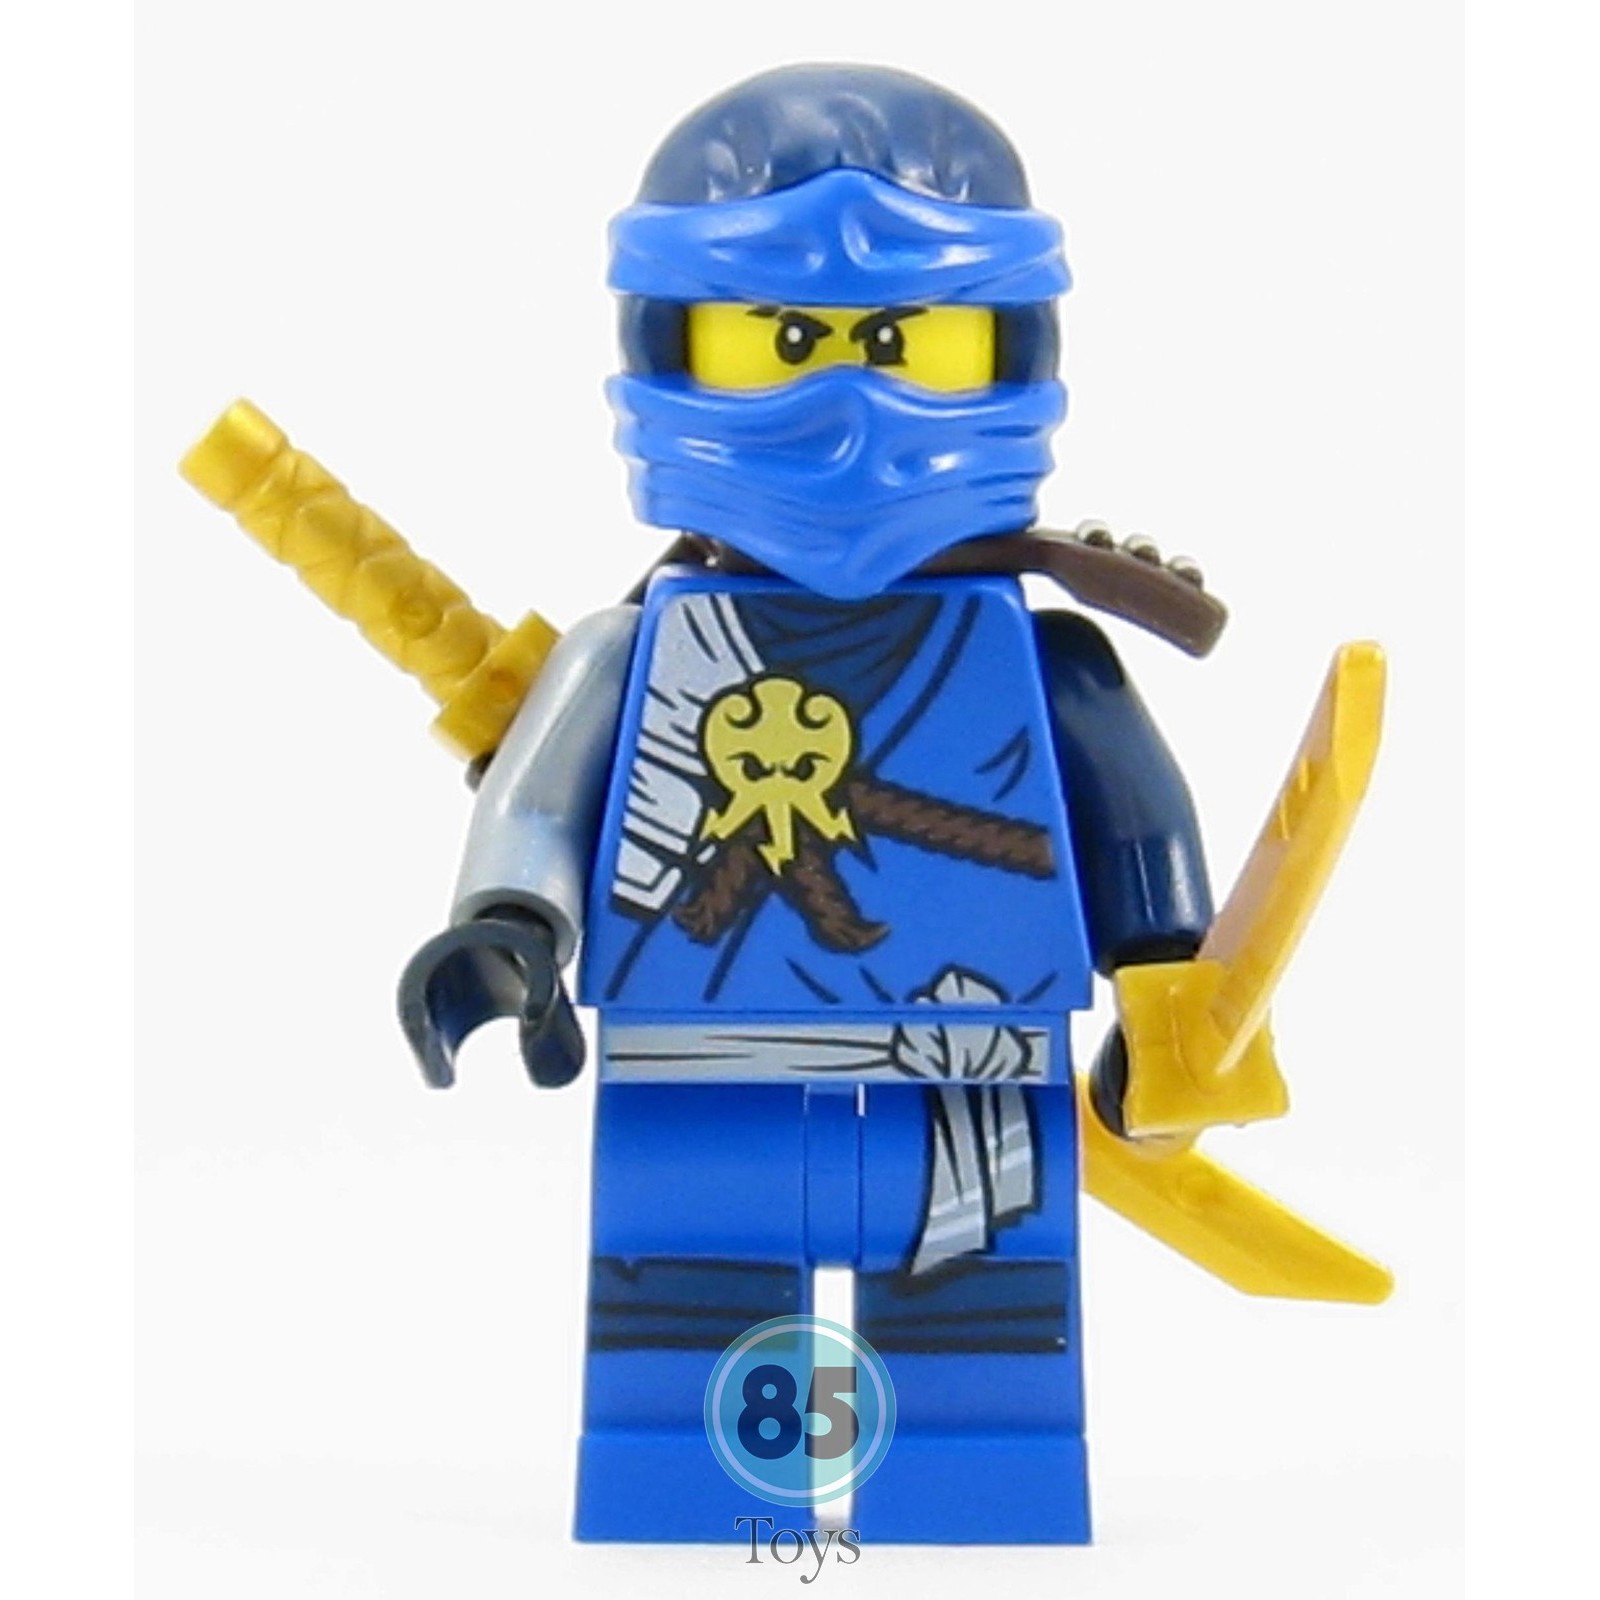 Lego Ninjago JAY Original Minifigure from set 70595 Ultra Stealth Raider